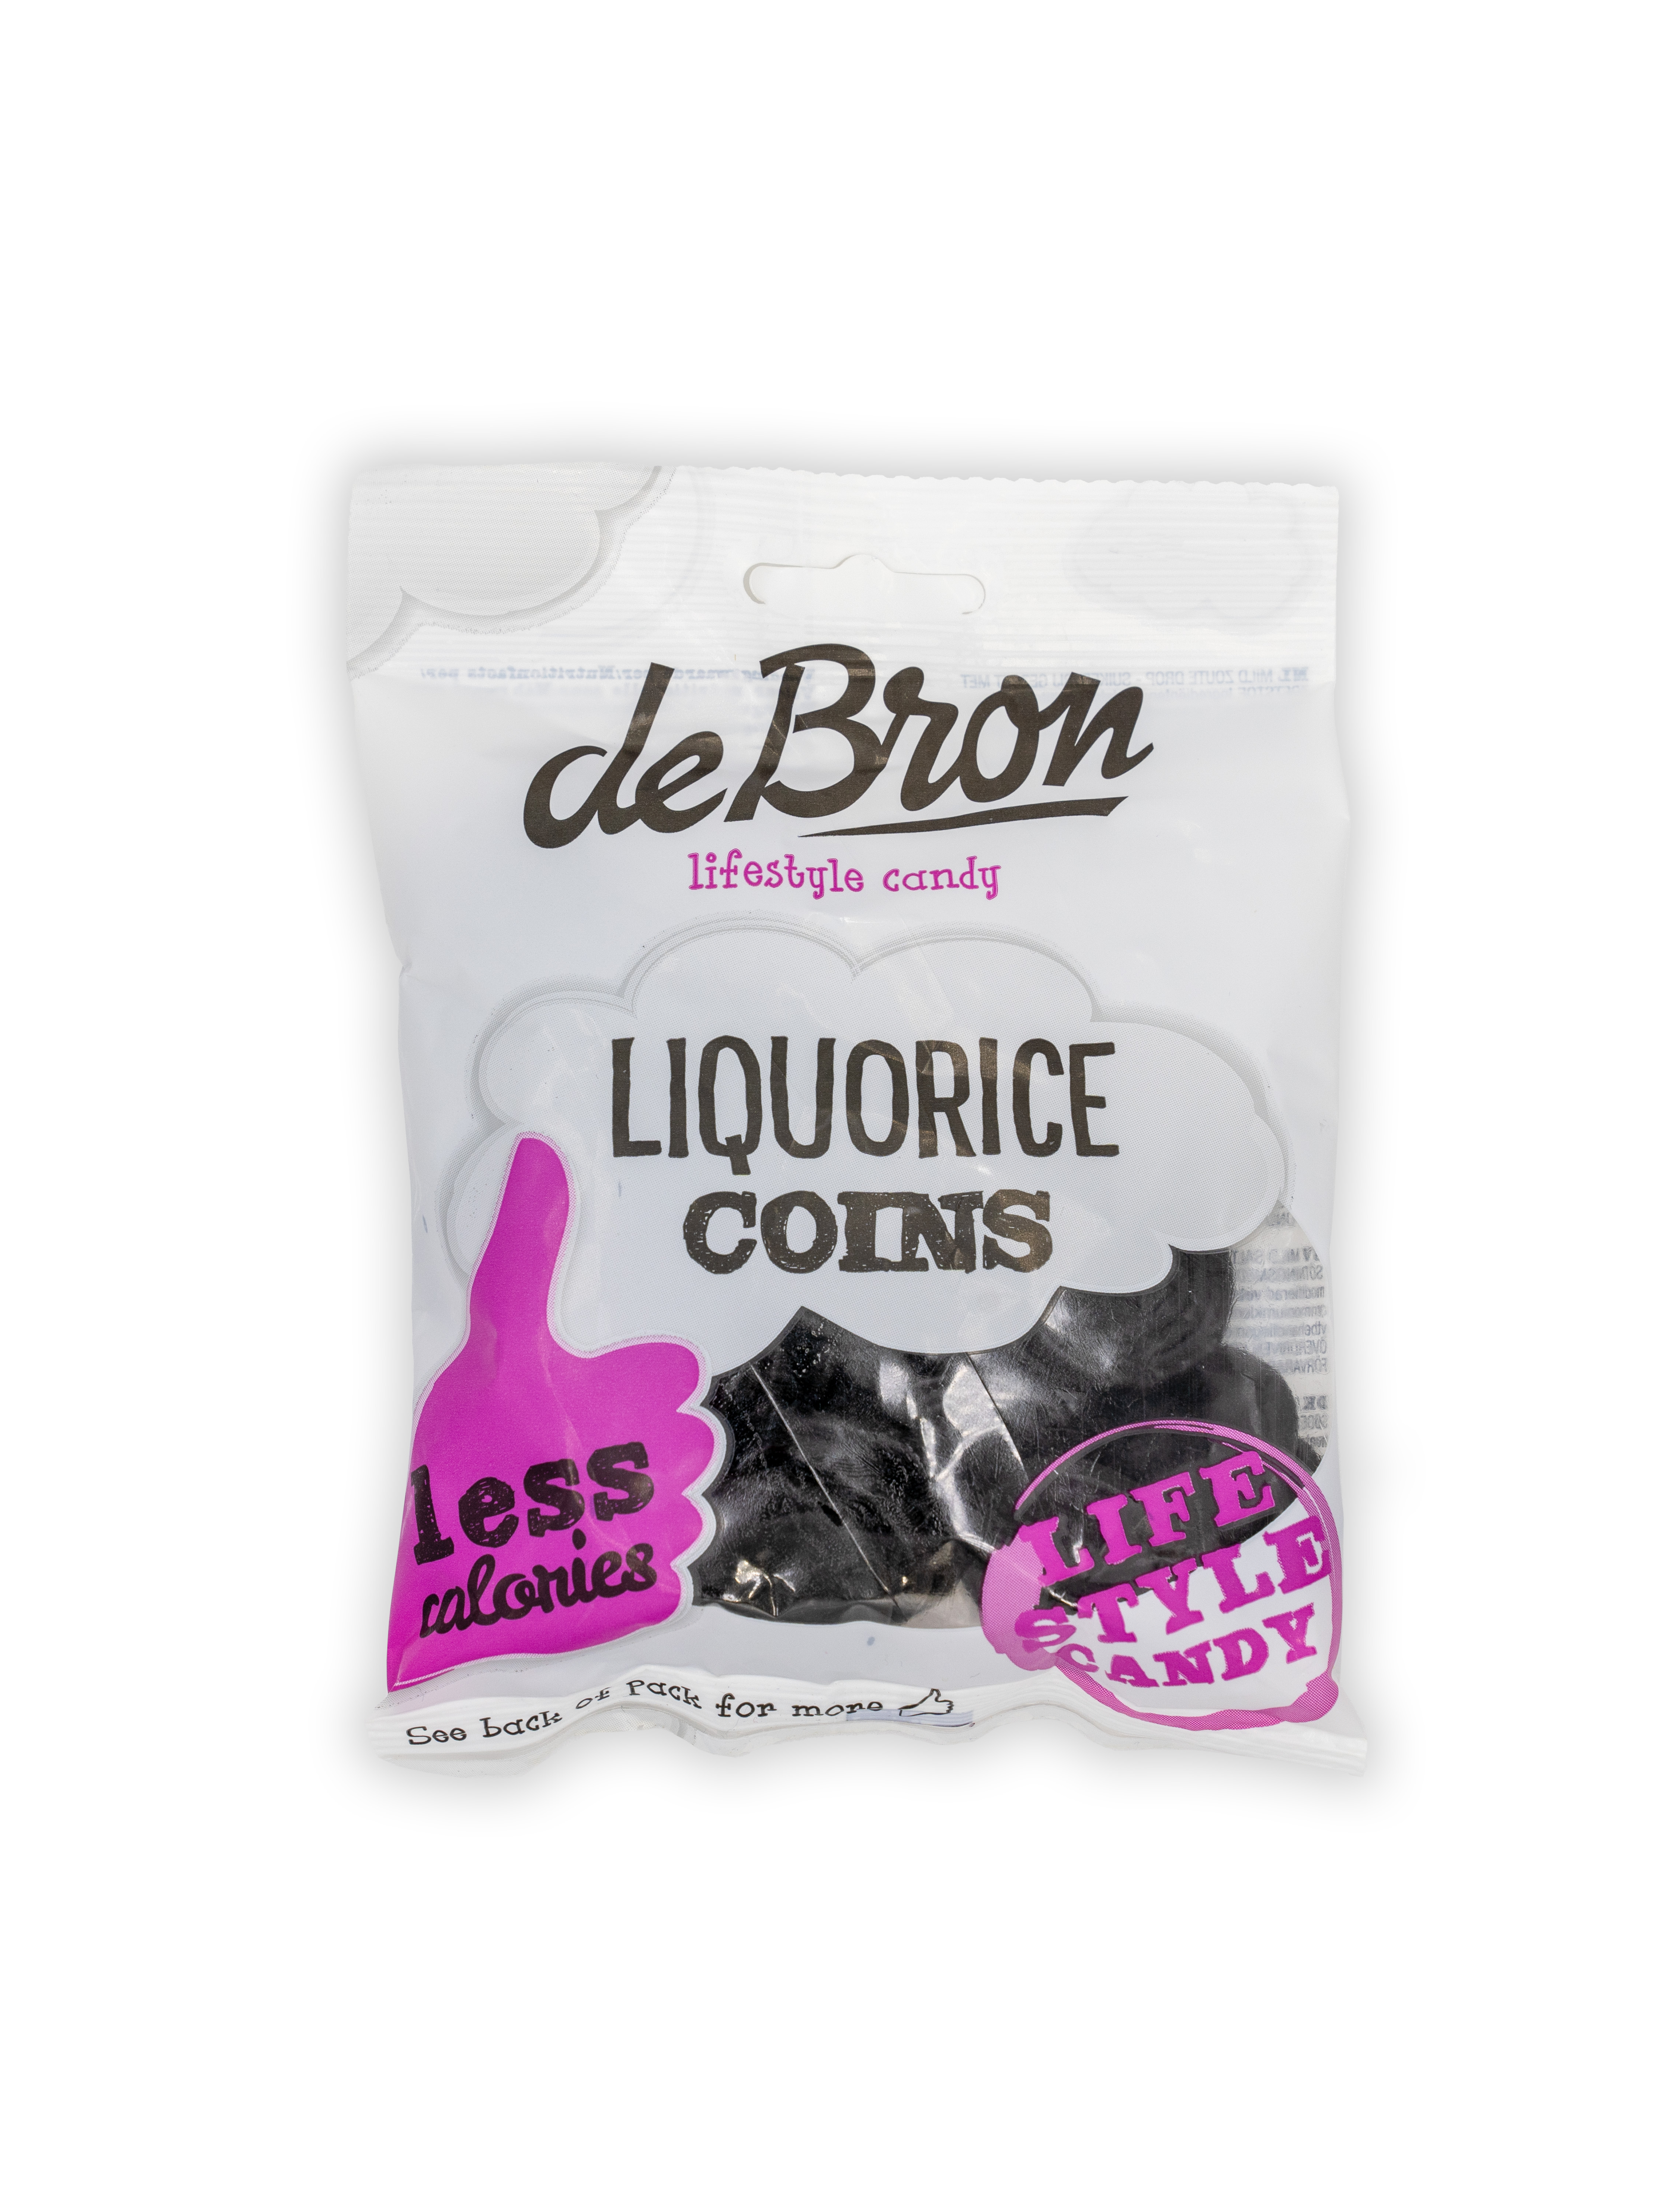 DeBron_Liquorice Coins_front